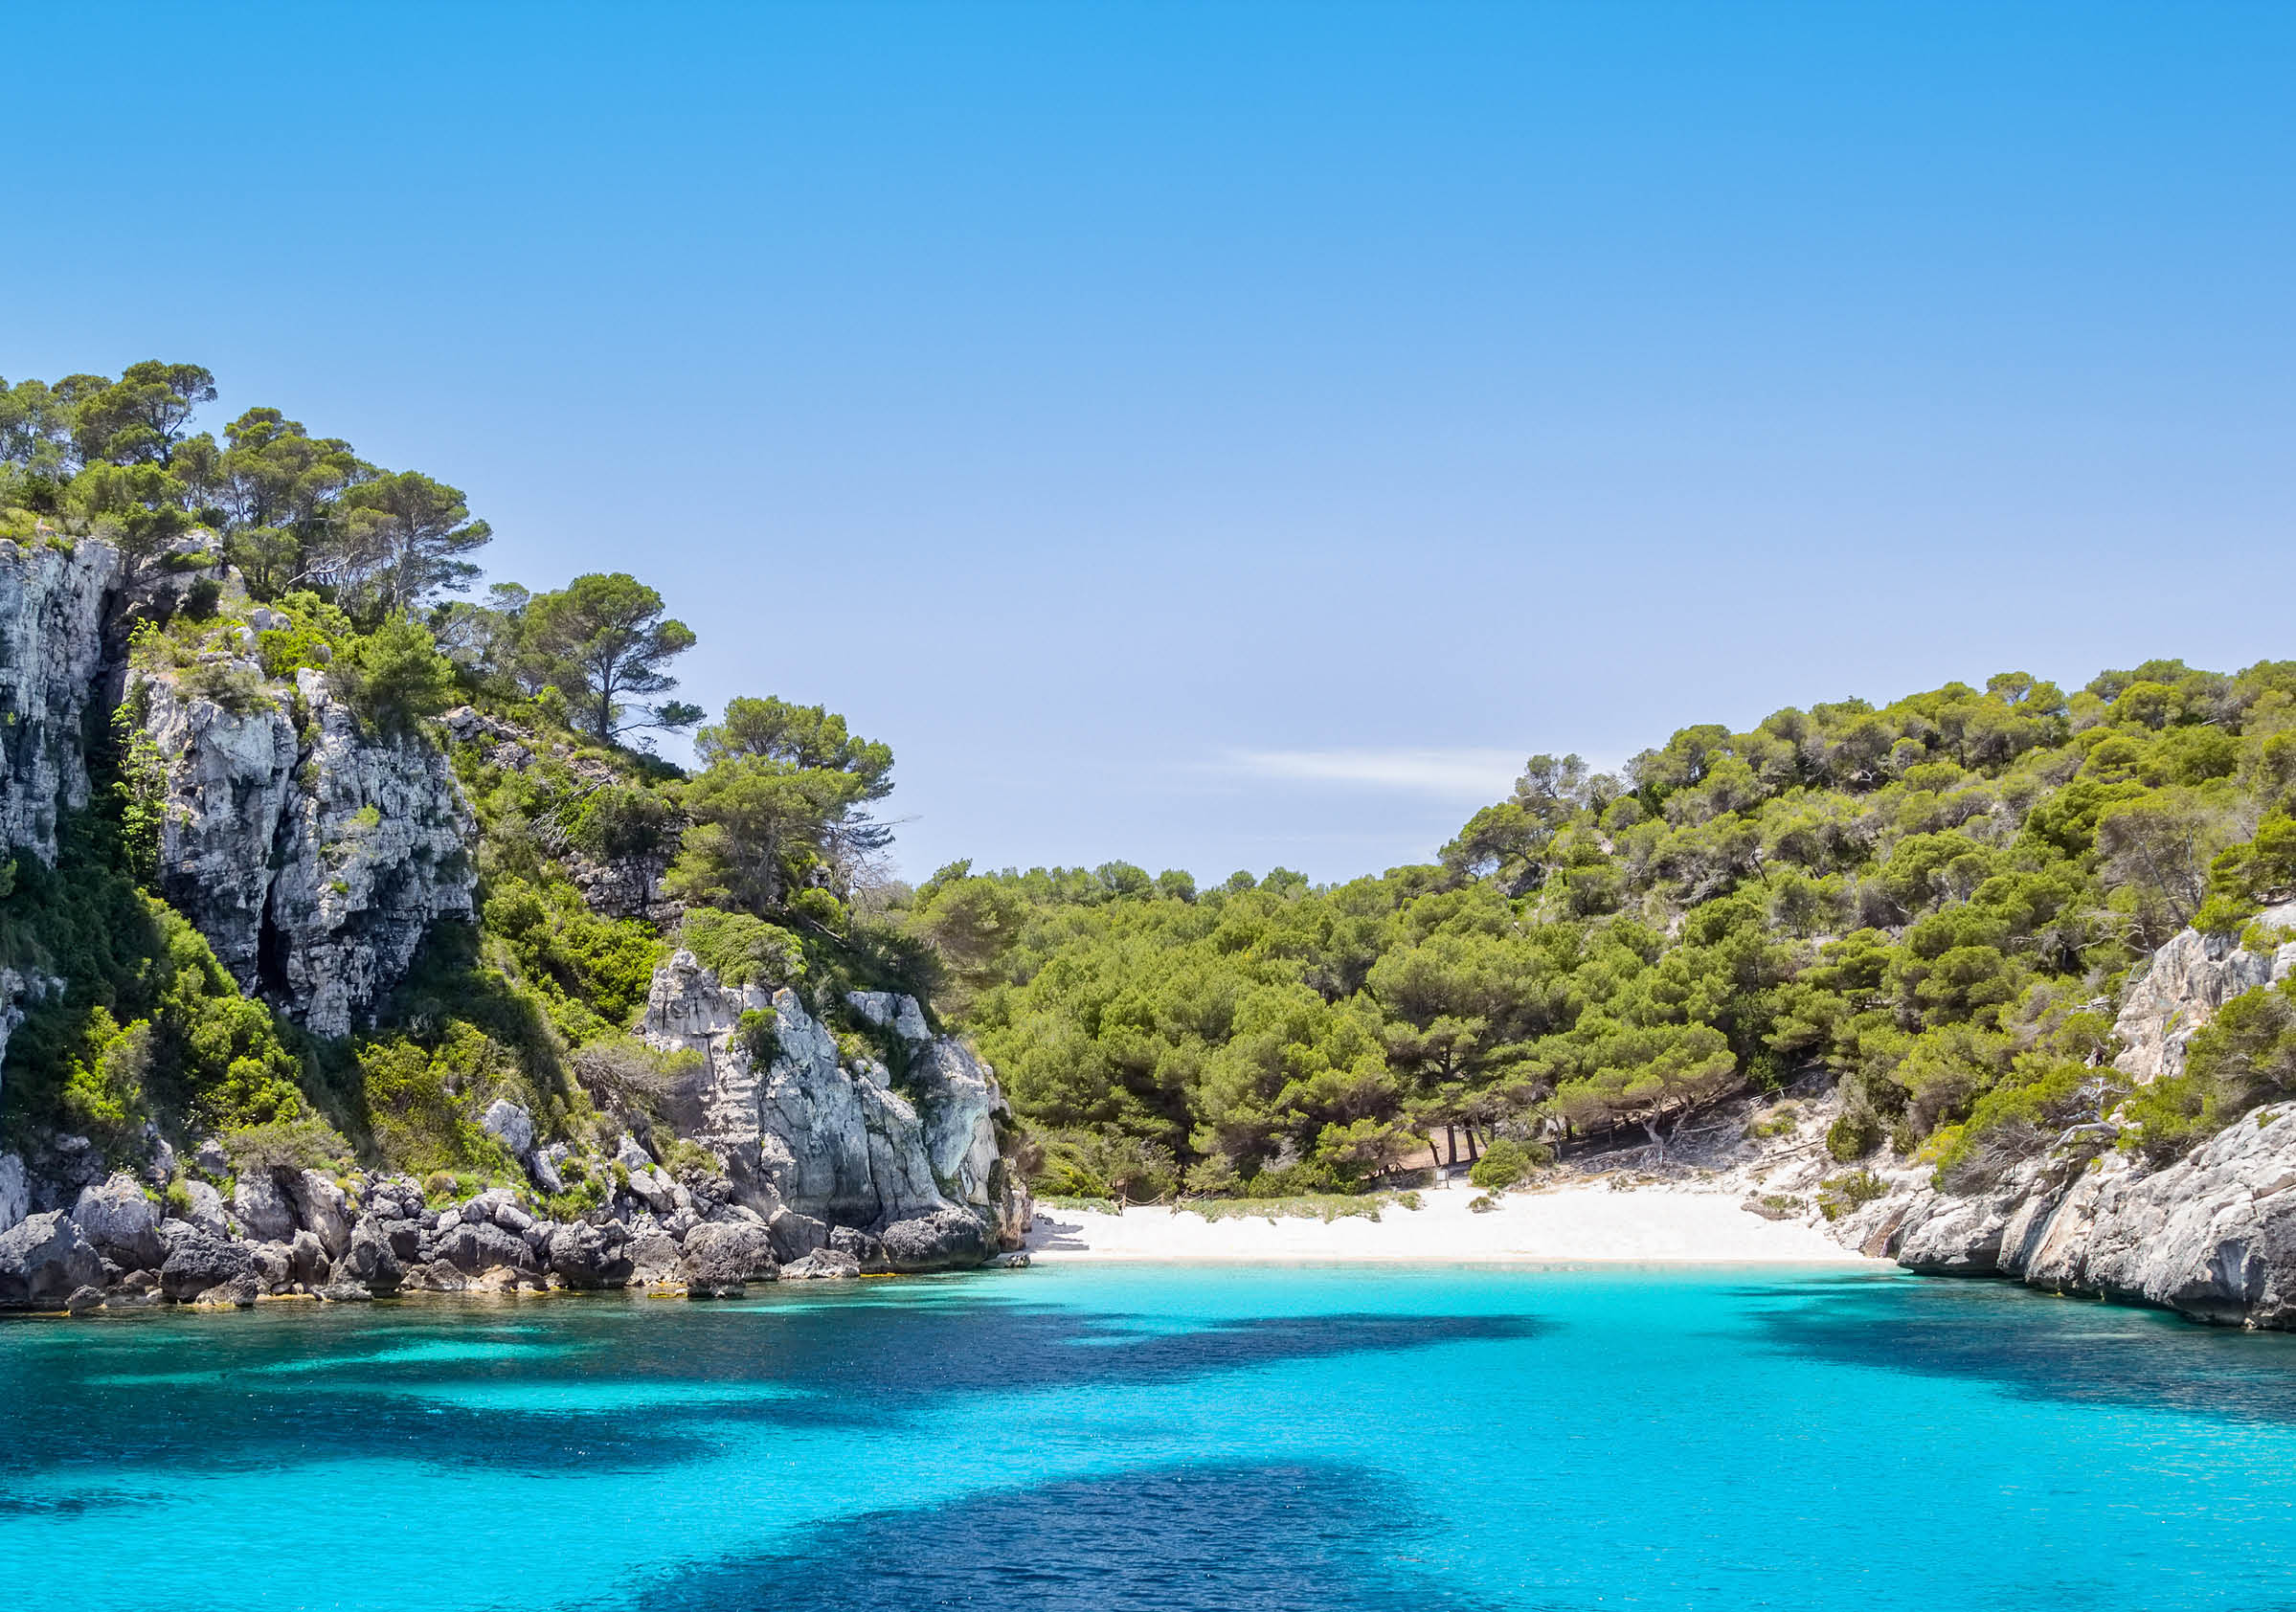 Cala Macarelleta - one of the most popular natural beaches of Menorca Island, Spain